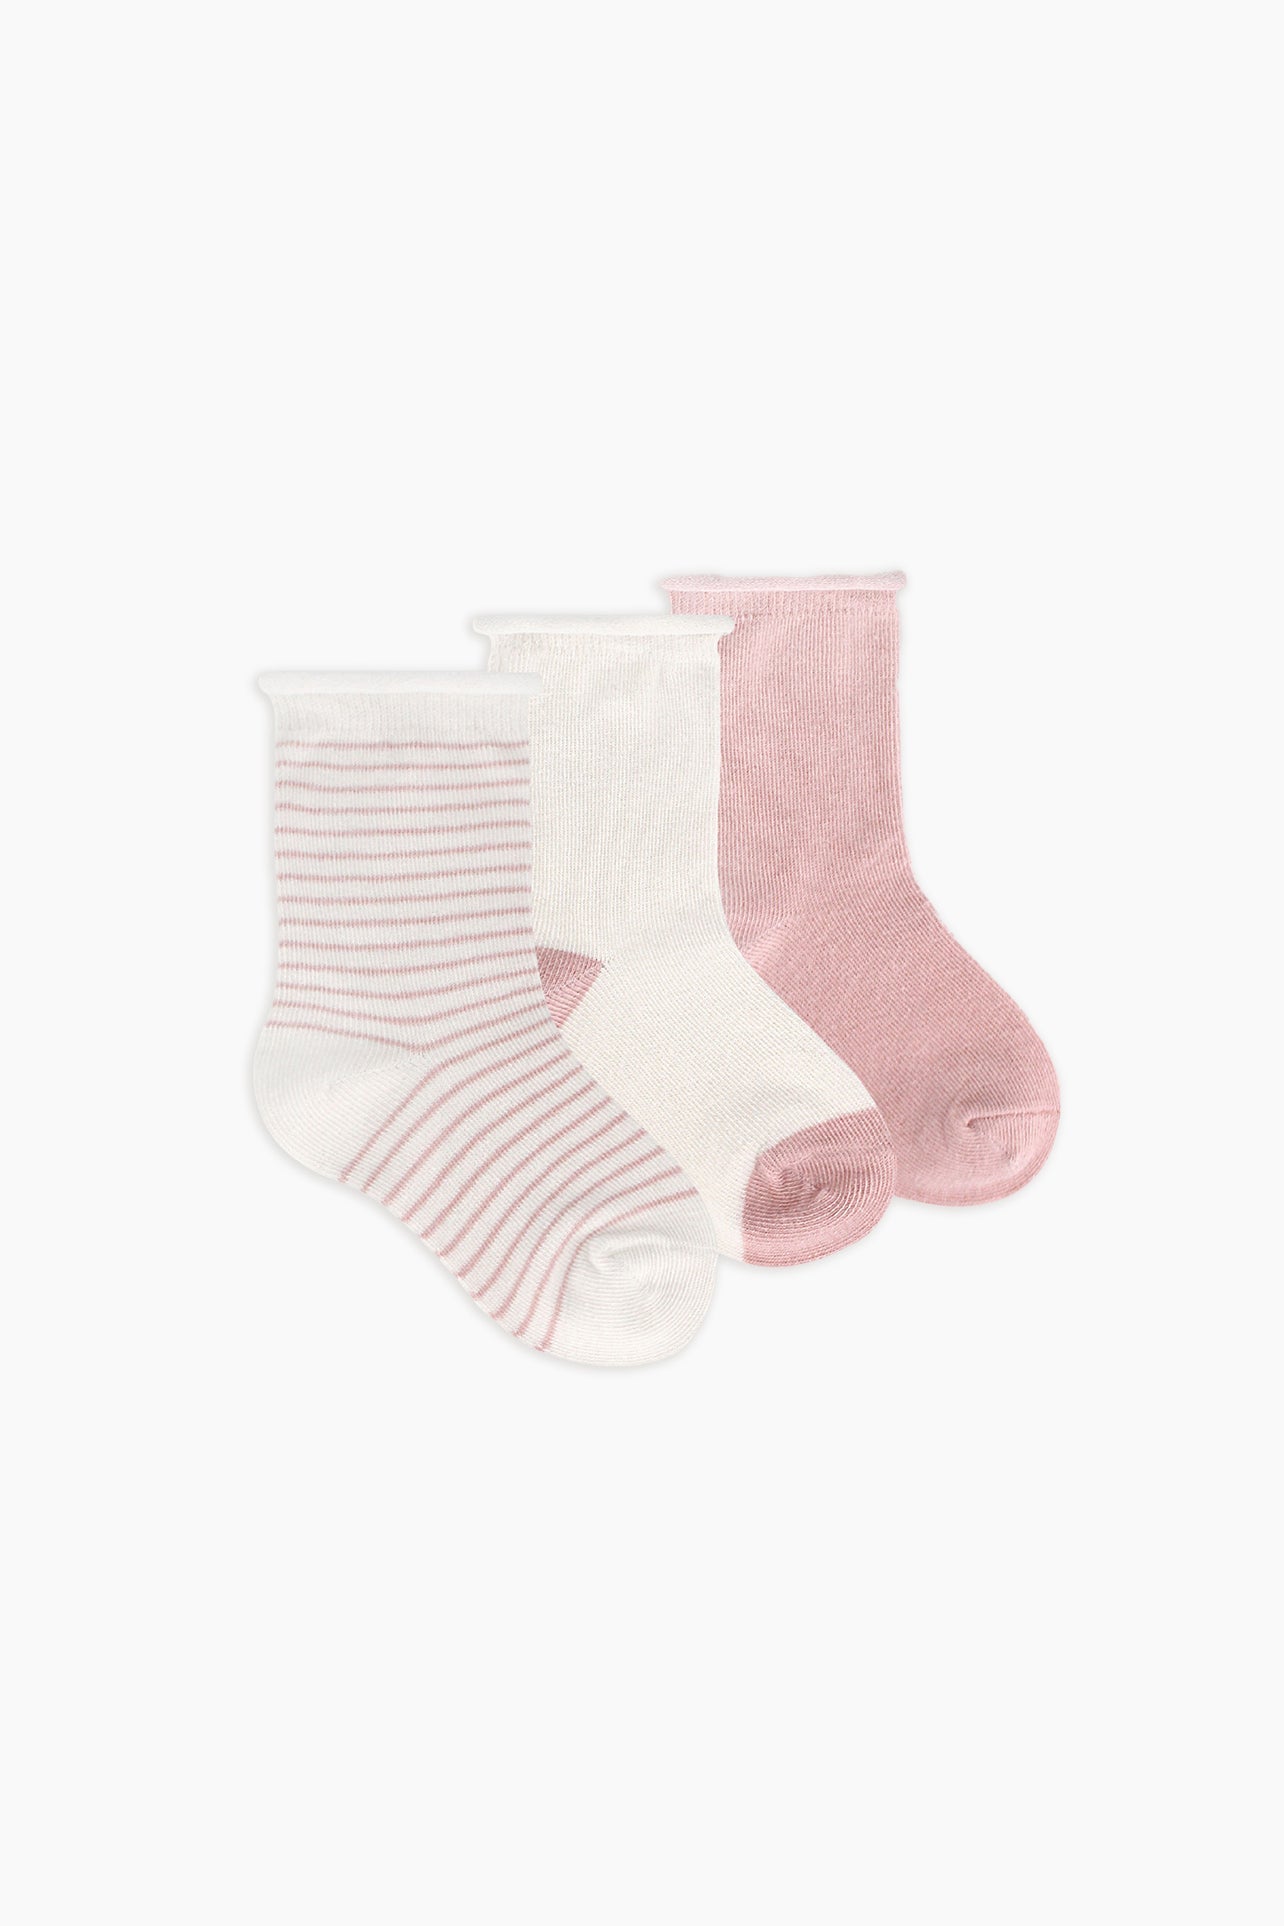 Snugabye Organic Cotton Toddler Crew Socks 3-Pack - Misty Rose